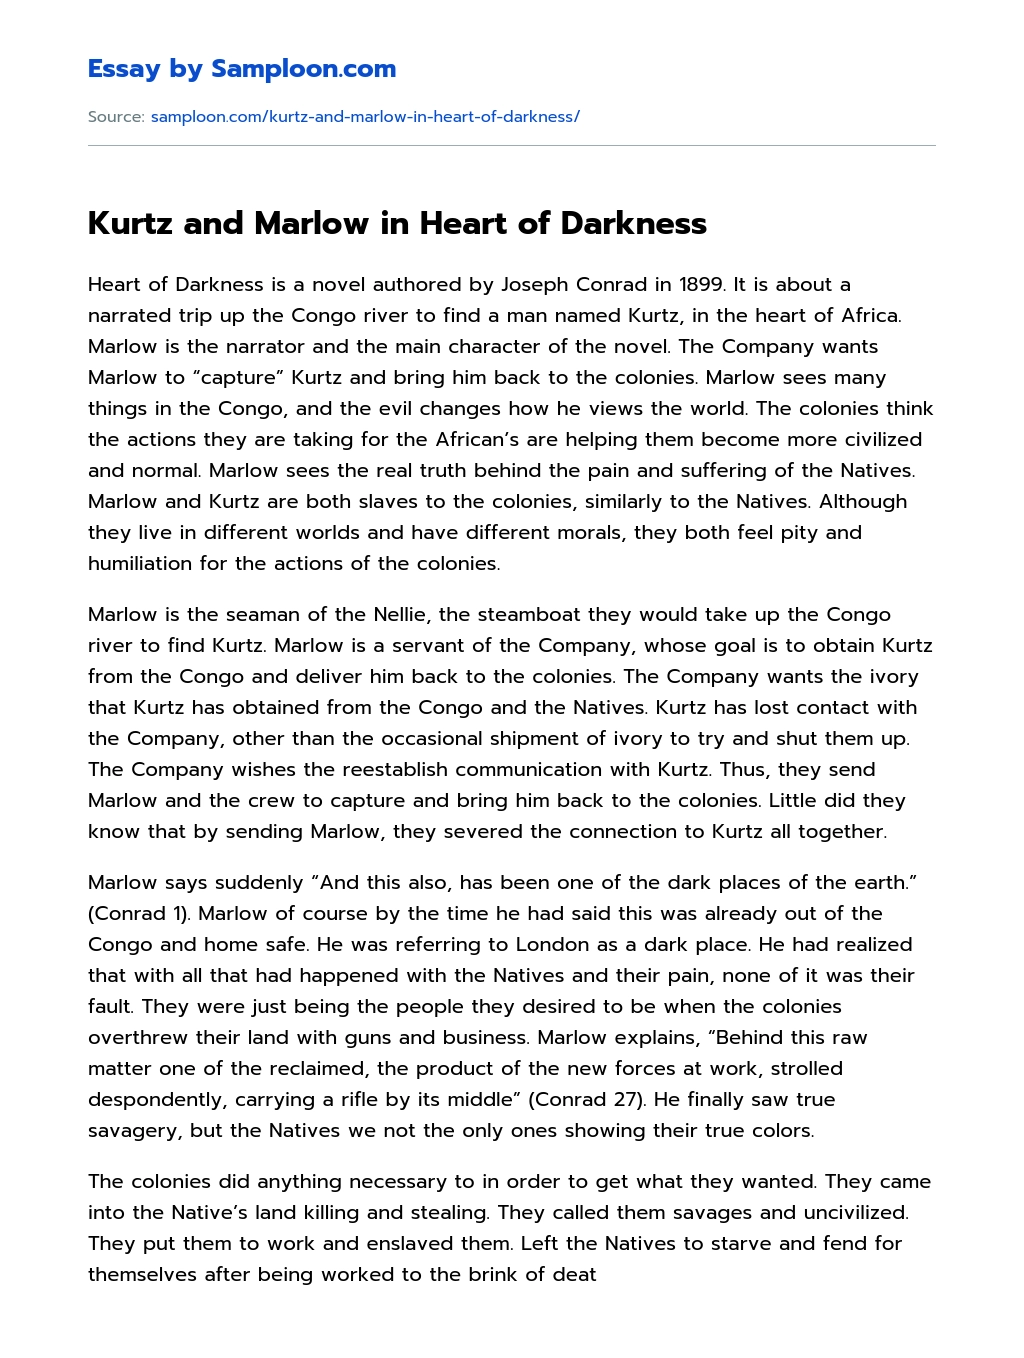 Kurtz and Marlow in Heart of Darkness Summary essay